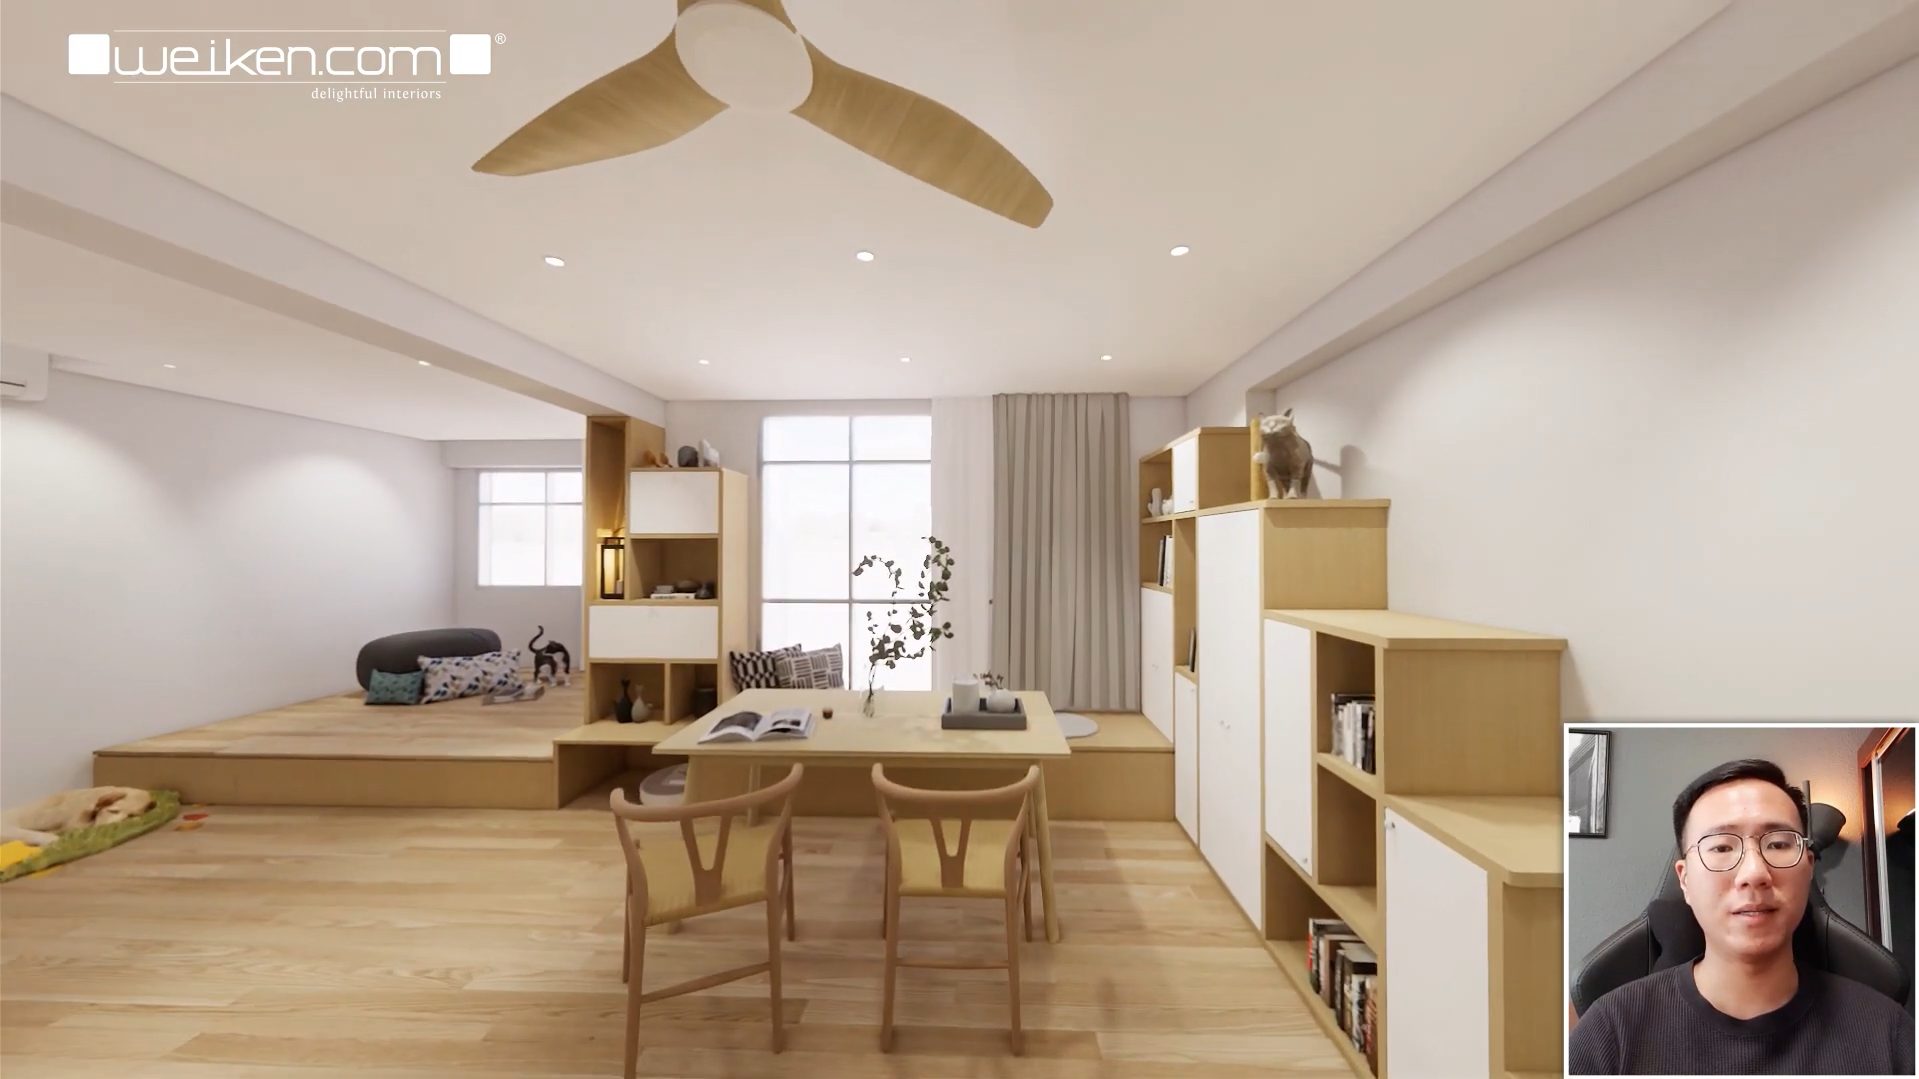 45 000 4 Room Bto Design In Scandinavian Style Virtual Home Tour